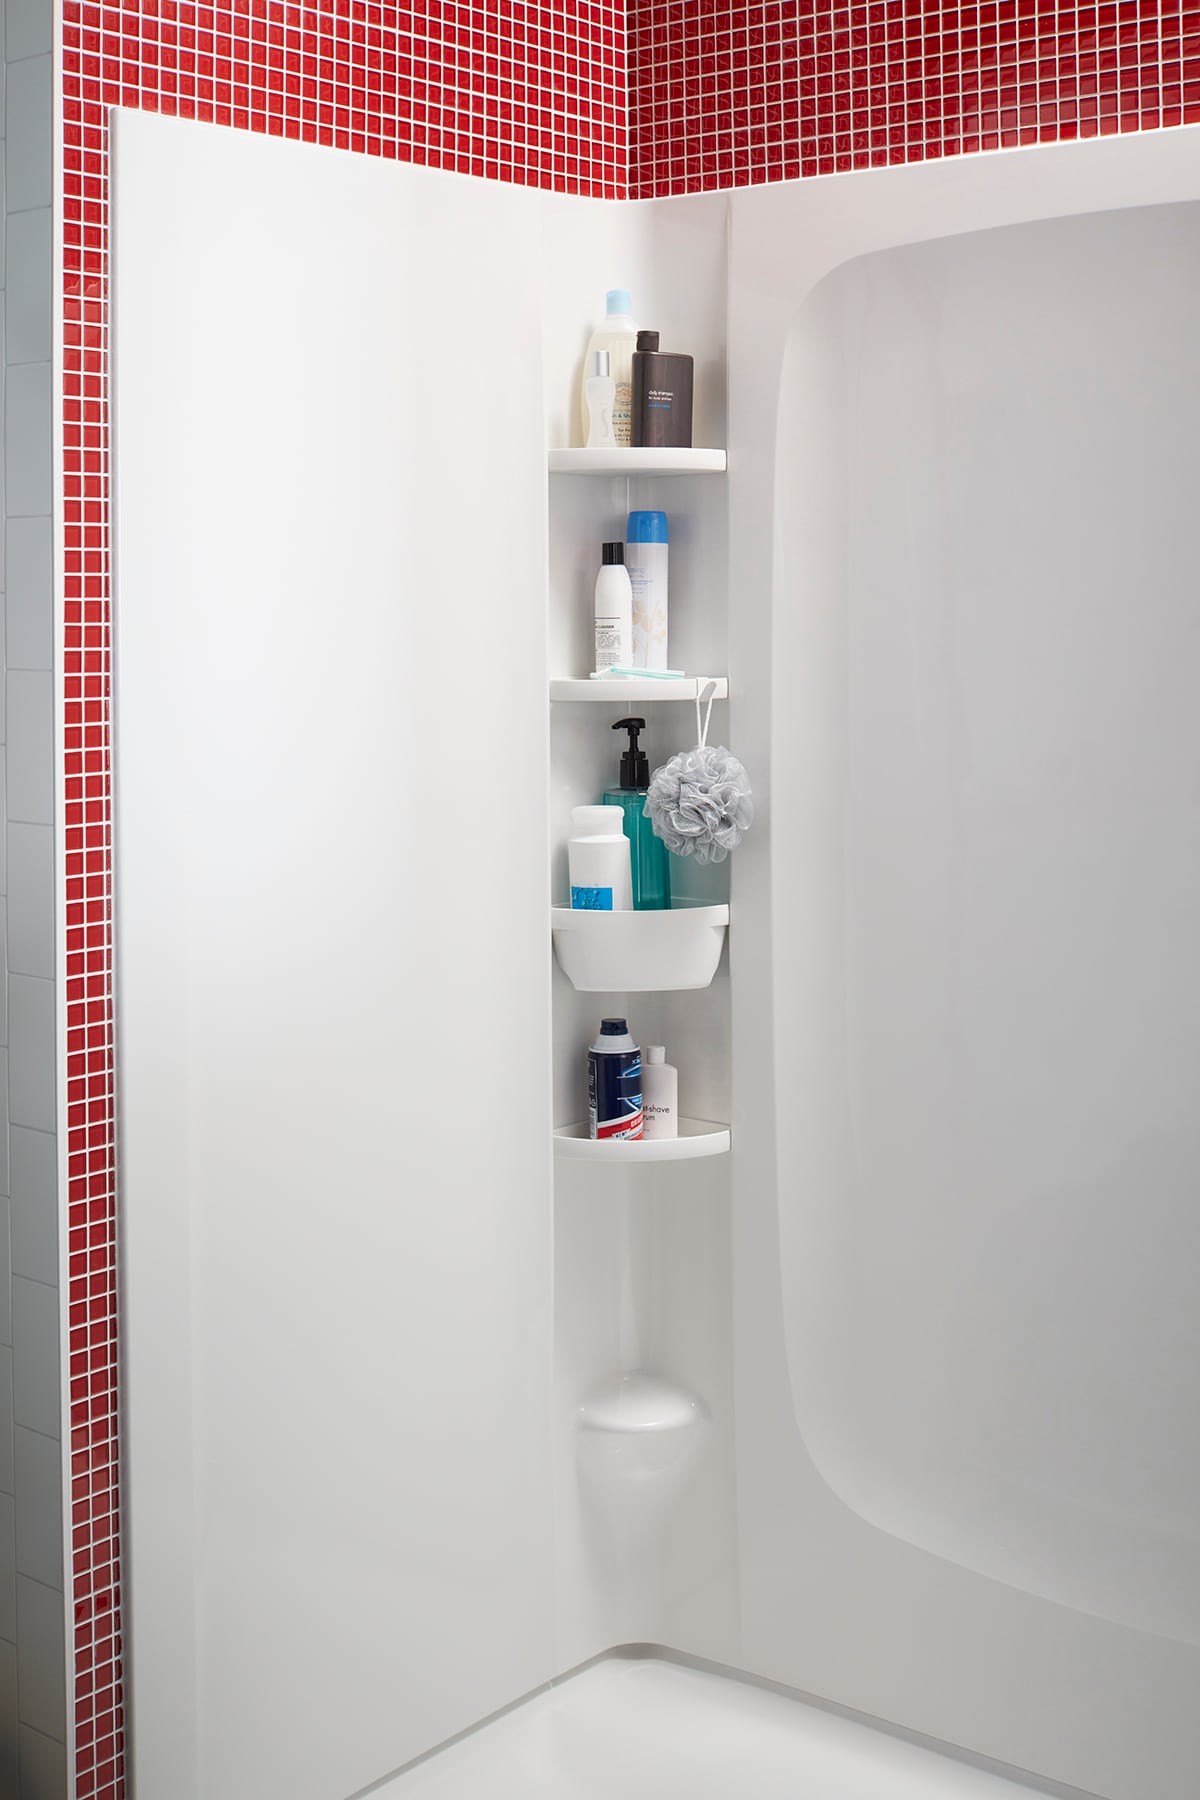 Shower corner shelf question. - Ceramic Tile Advice Forums - John